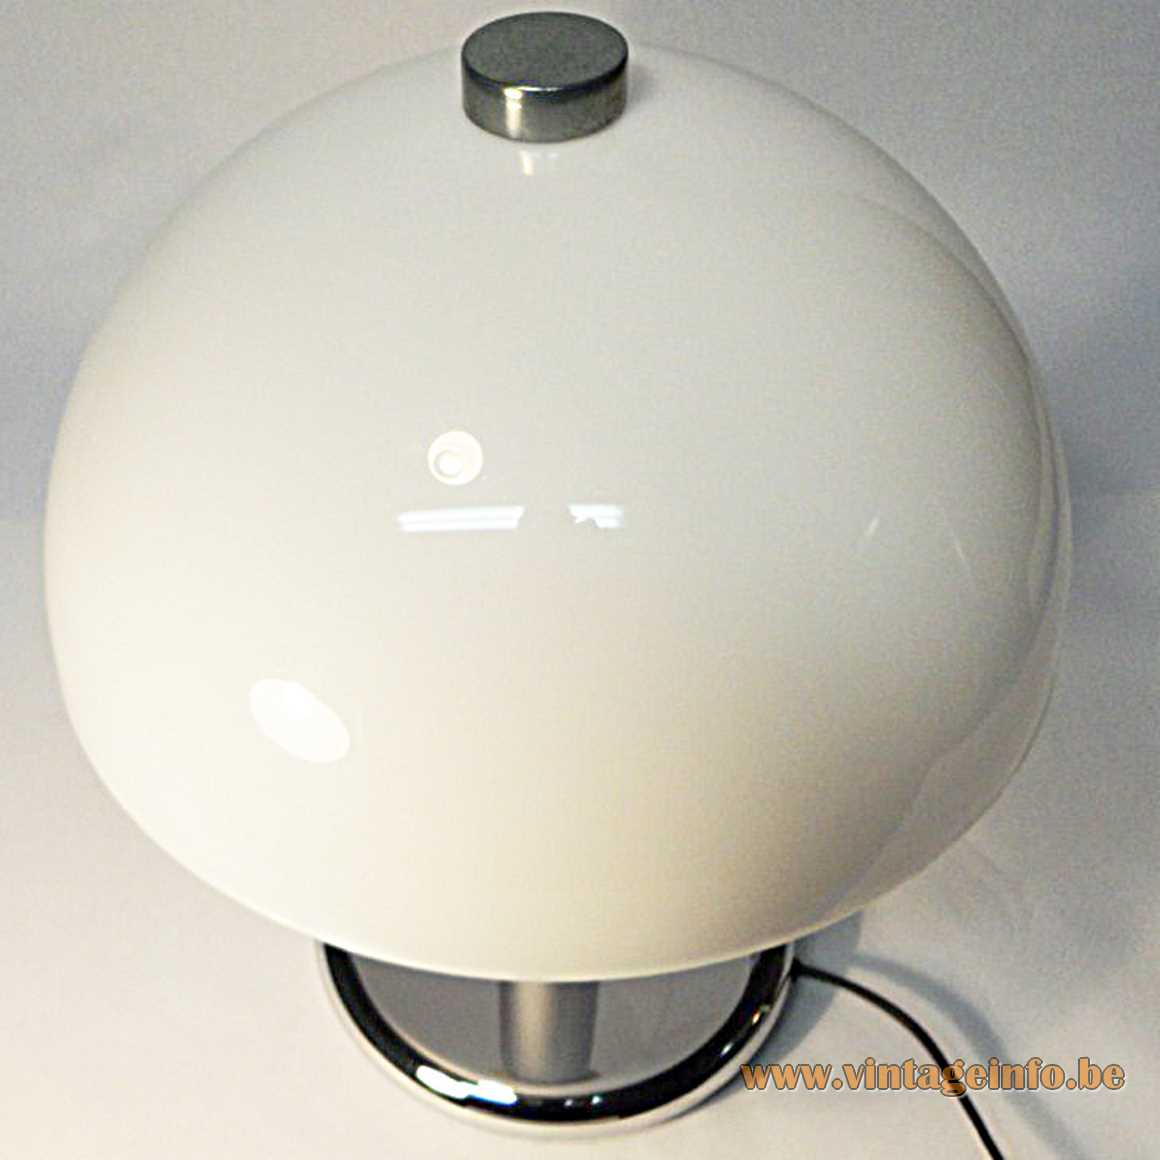 Acrylic & chrome mushroom table lamp round base & rod white plastic lampshade Massive Belgium 1970s 1980s